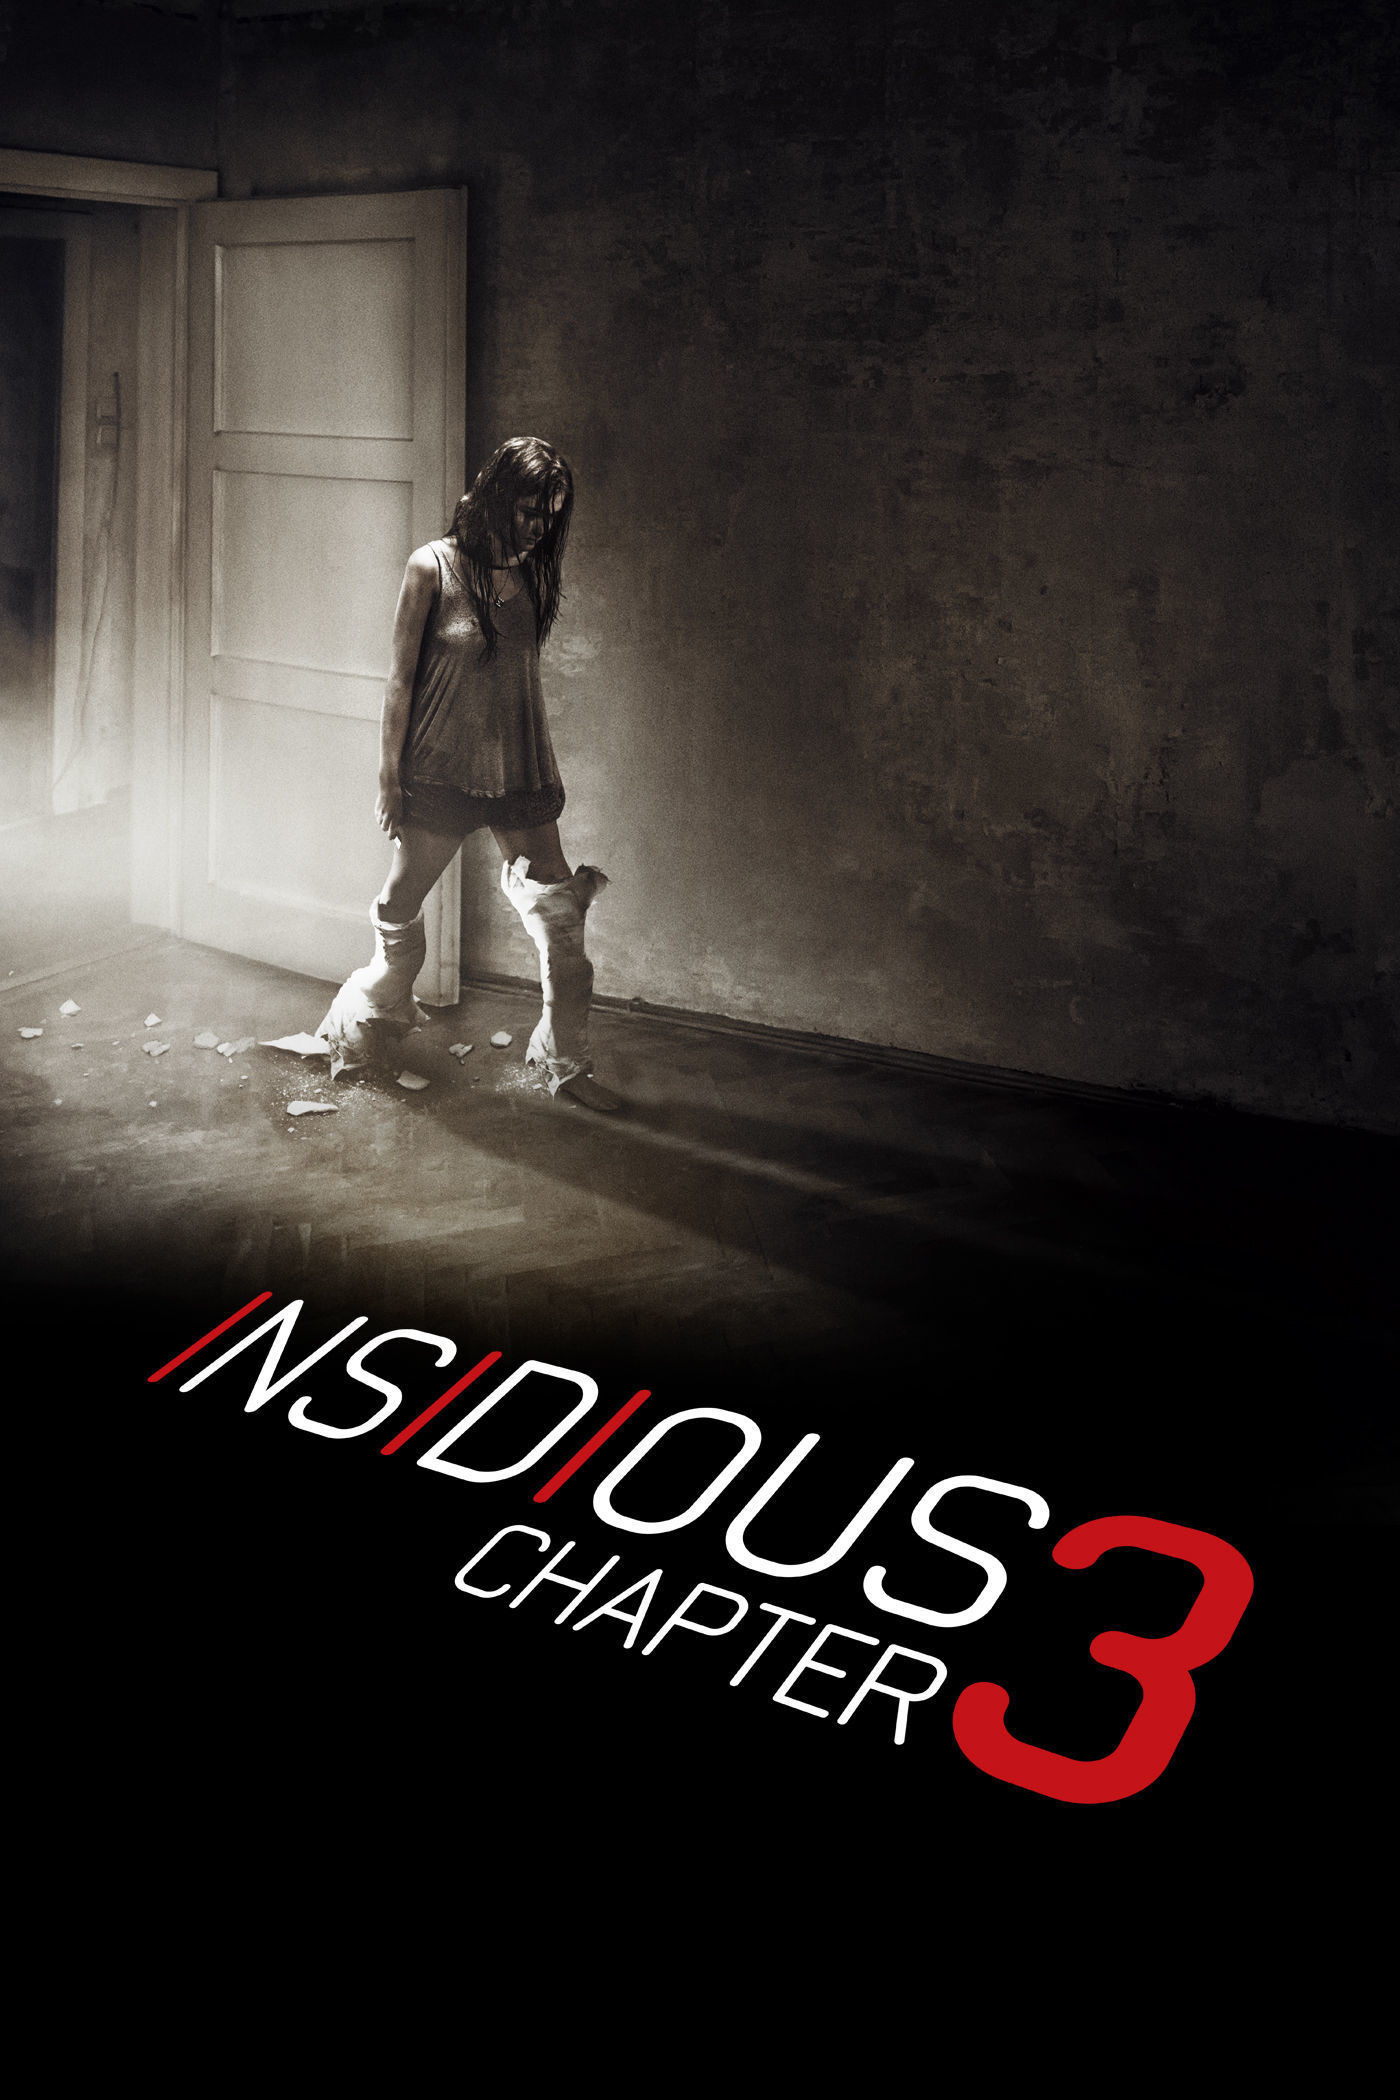 insidious chapter 3 movie